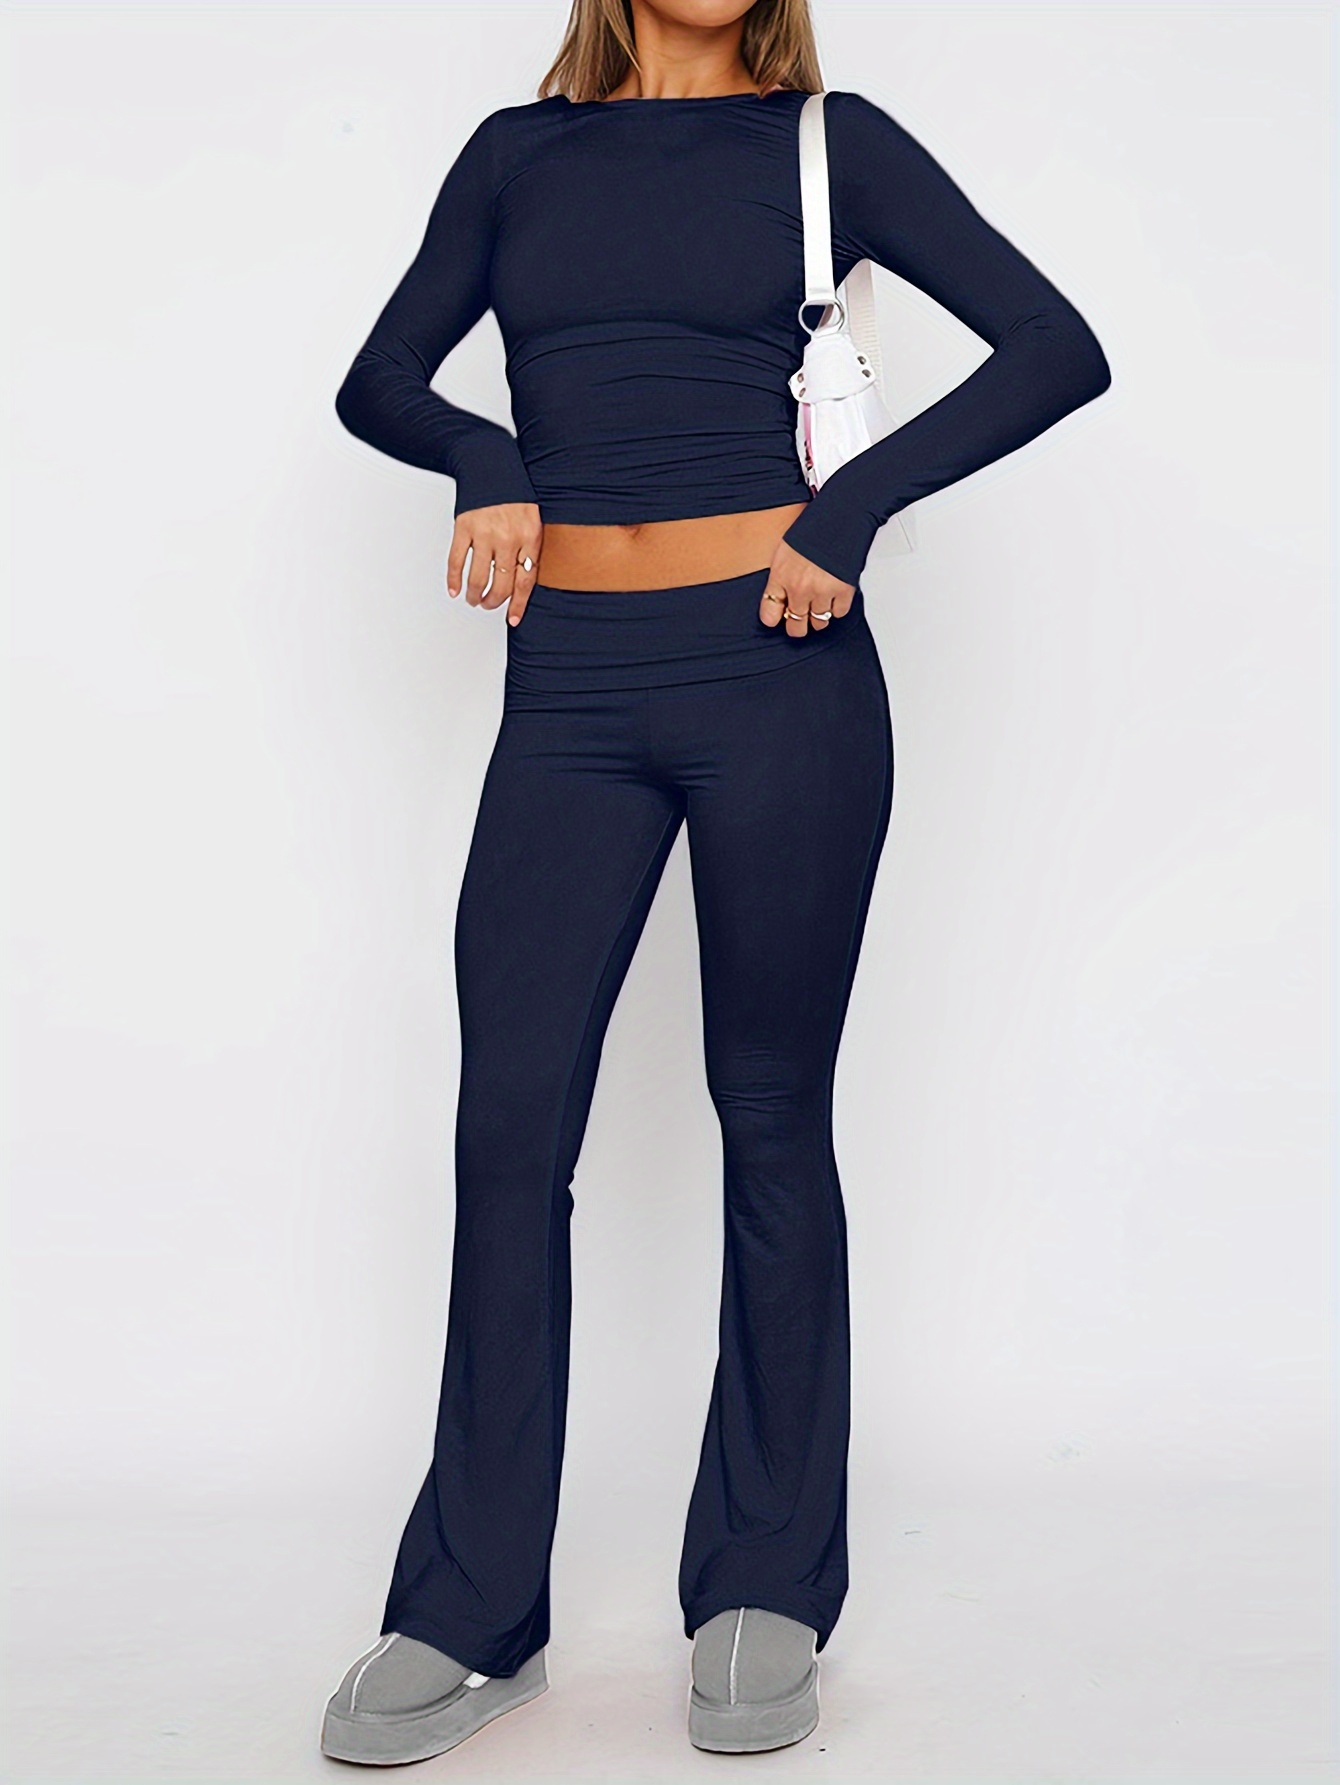 Damen Yoga Kleidung Set Sommer Sport Fitness Tank Top Shorts 2-teilig Set  Damen Unifarben Casual Running Tights Set